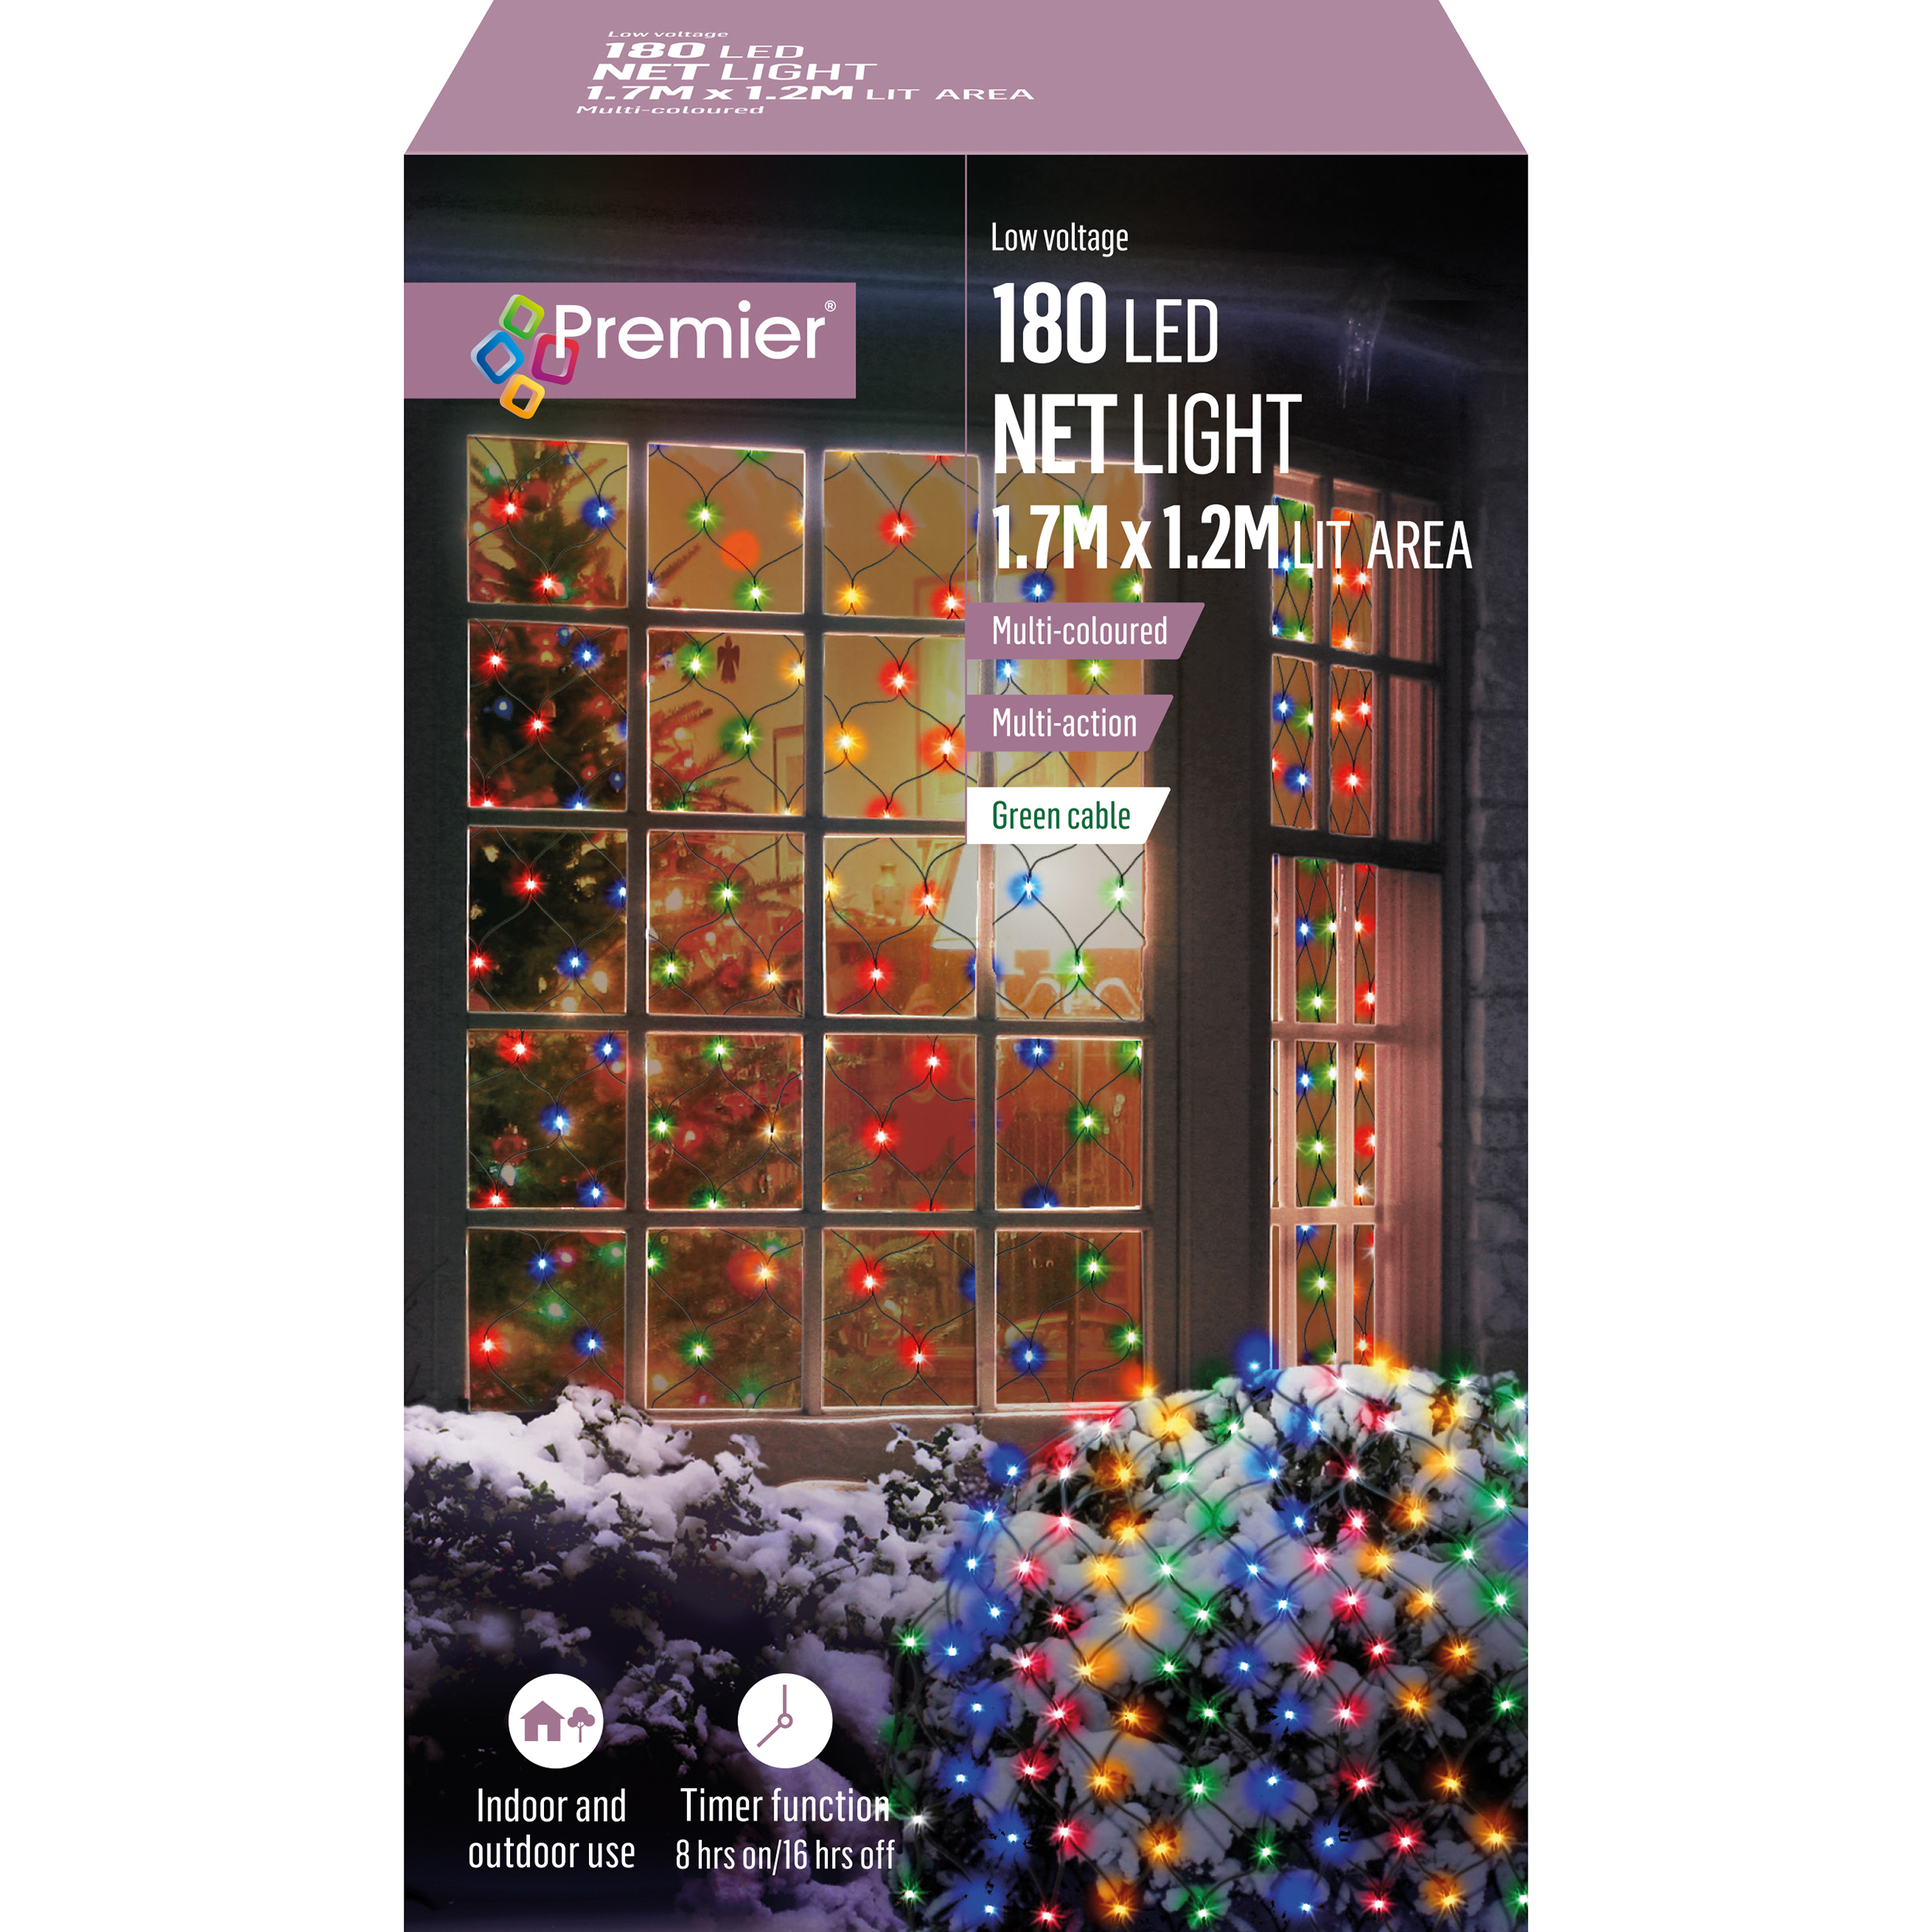 Net Lights 1.7M x 1.2M Multi Coloured